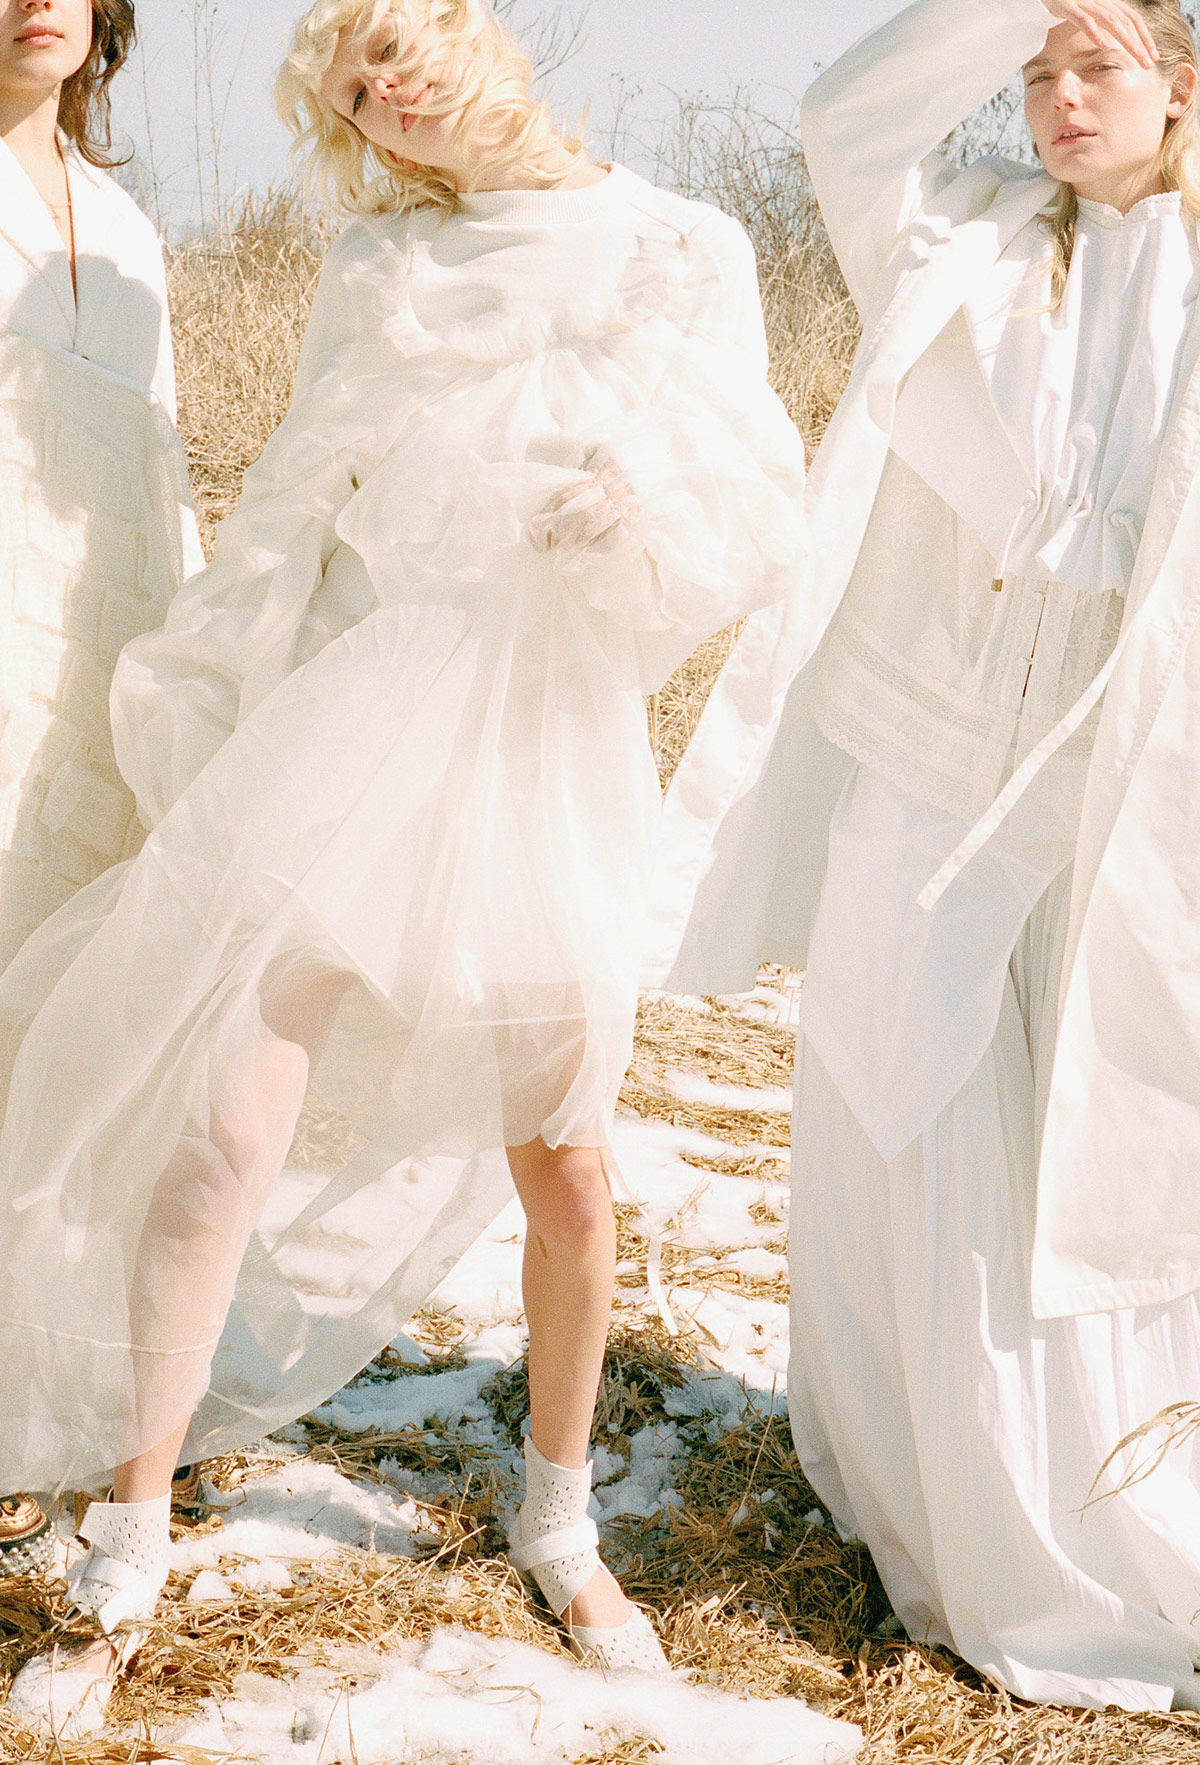 rebekah-campbell-ada-kokosar-fashionography-april-2